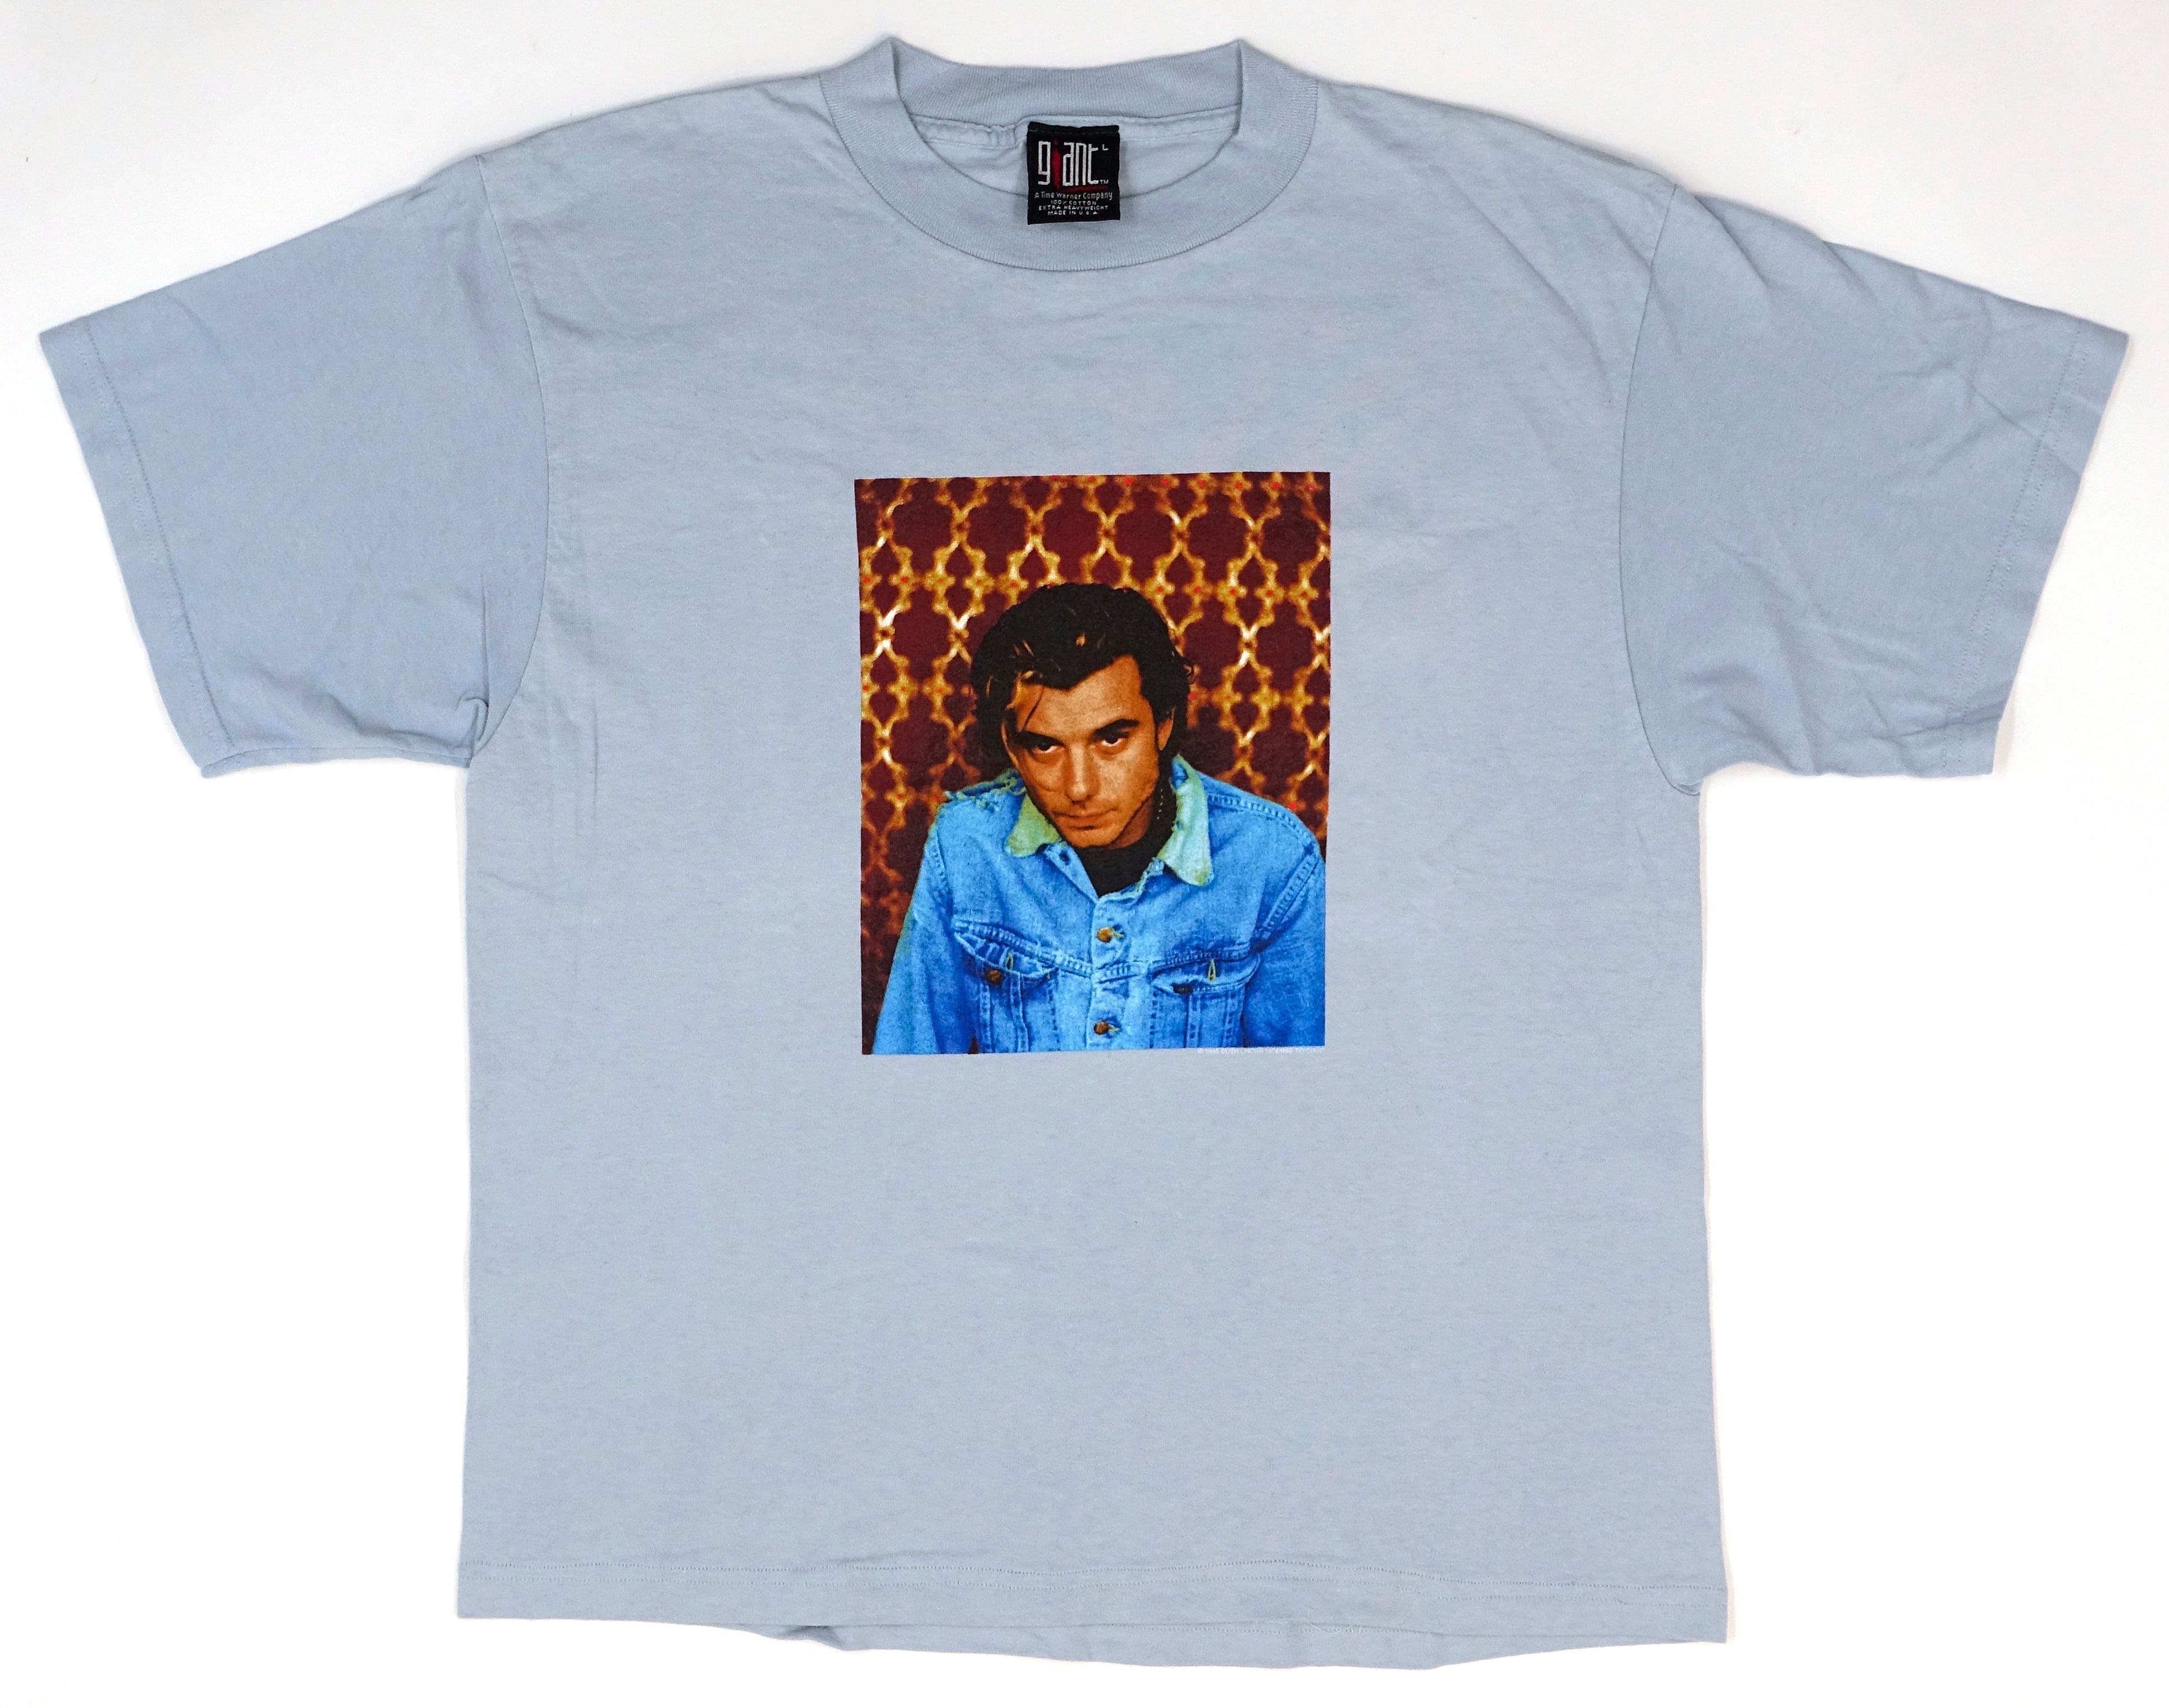 Bush - Gavin Rossdale Photo 1995 Tour Shirt Size Large